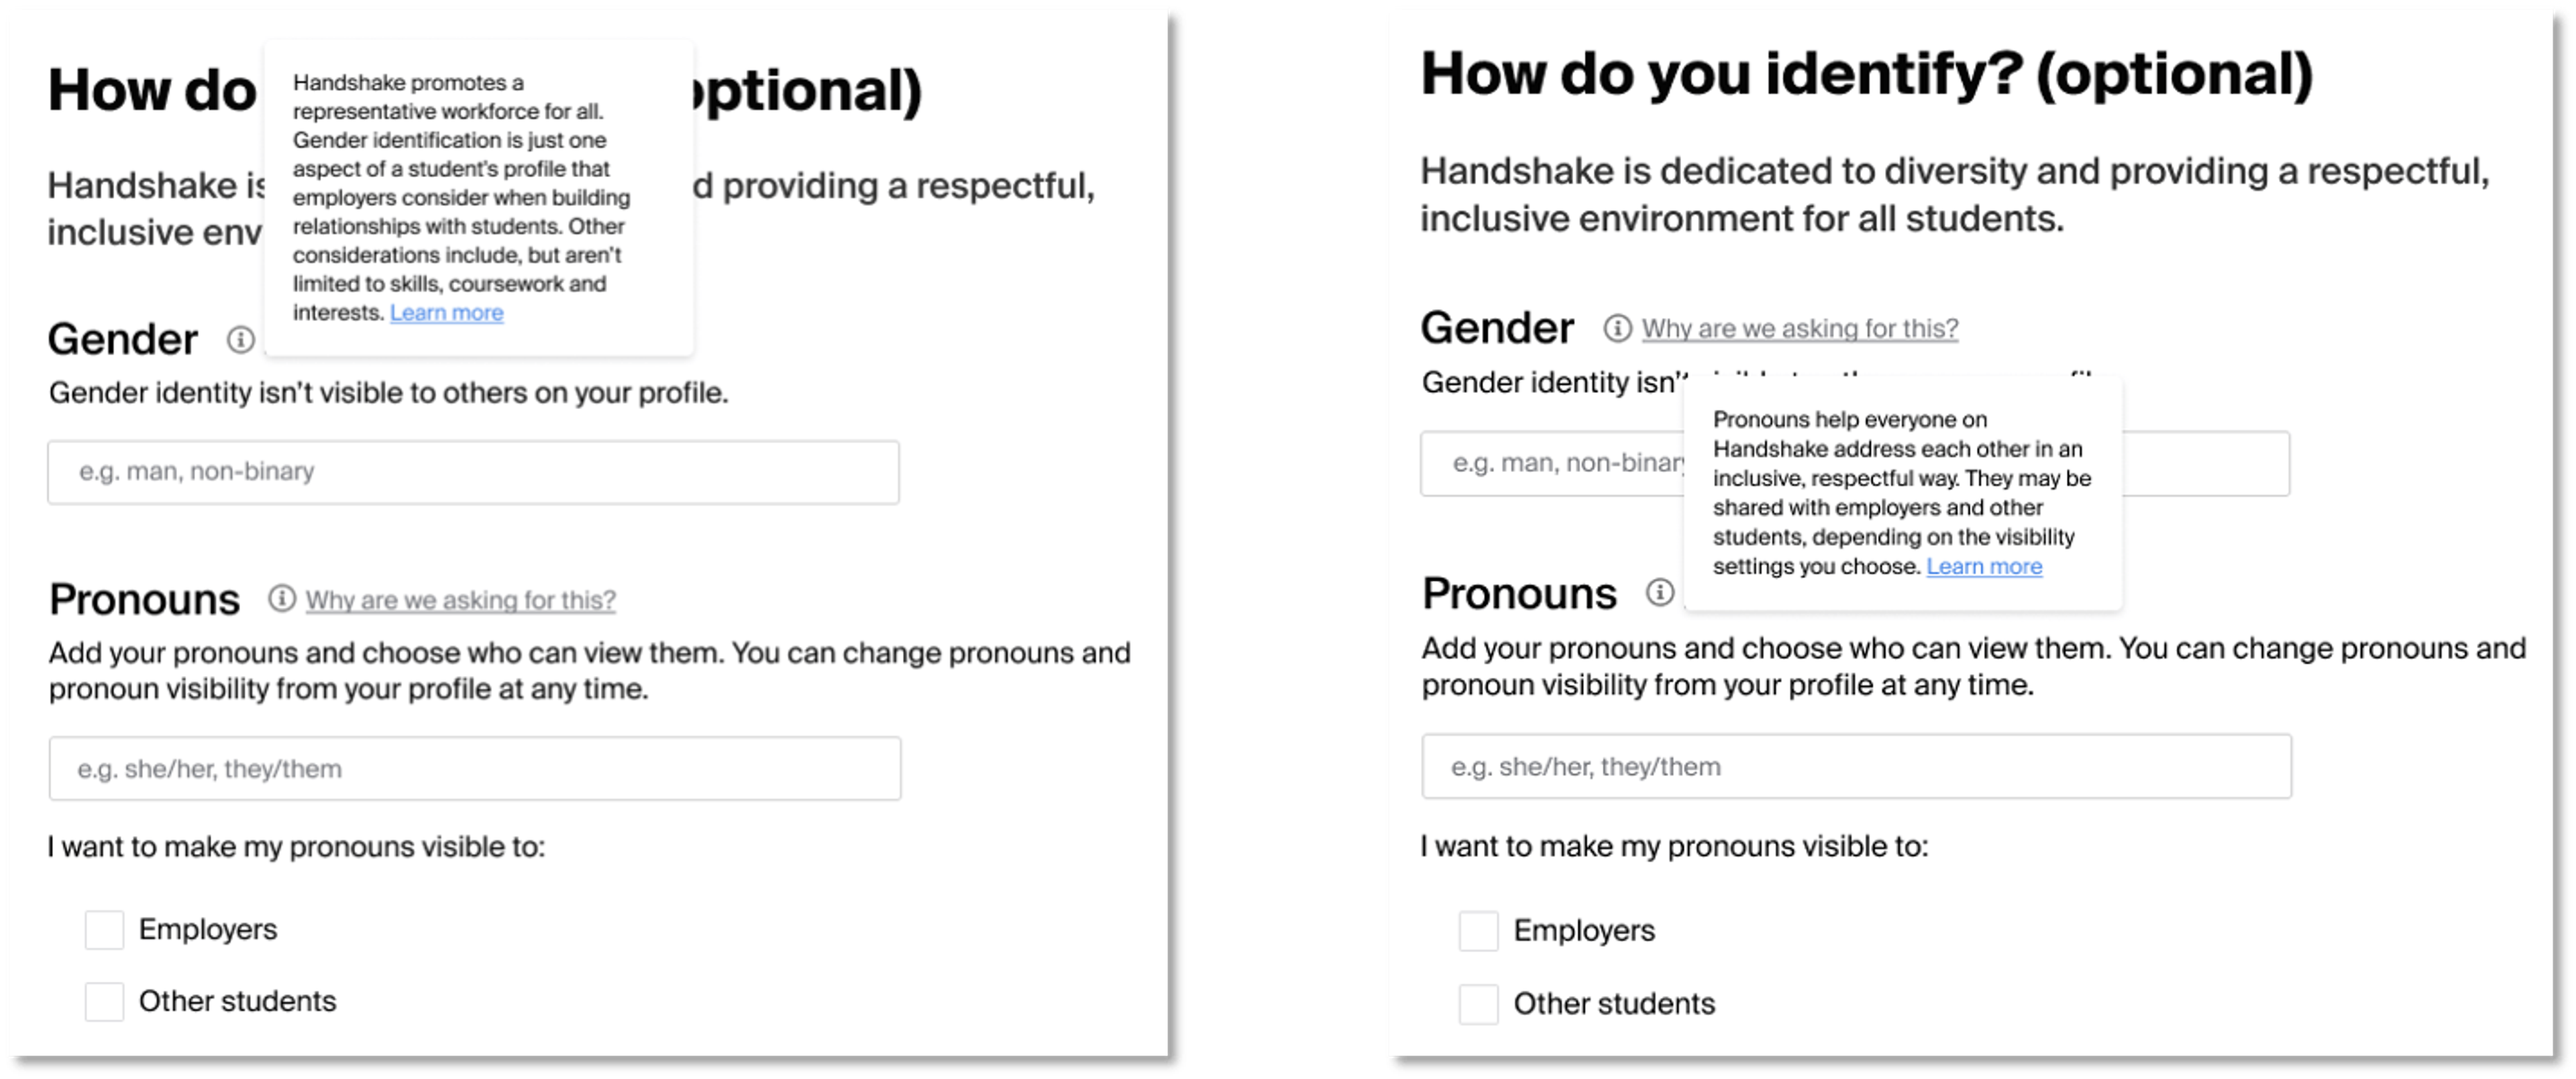 Gender identity and pronoun help text in Handshake